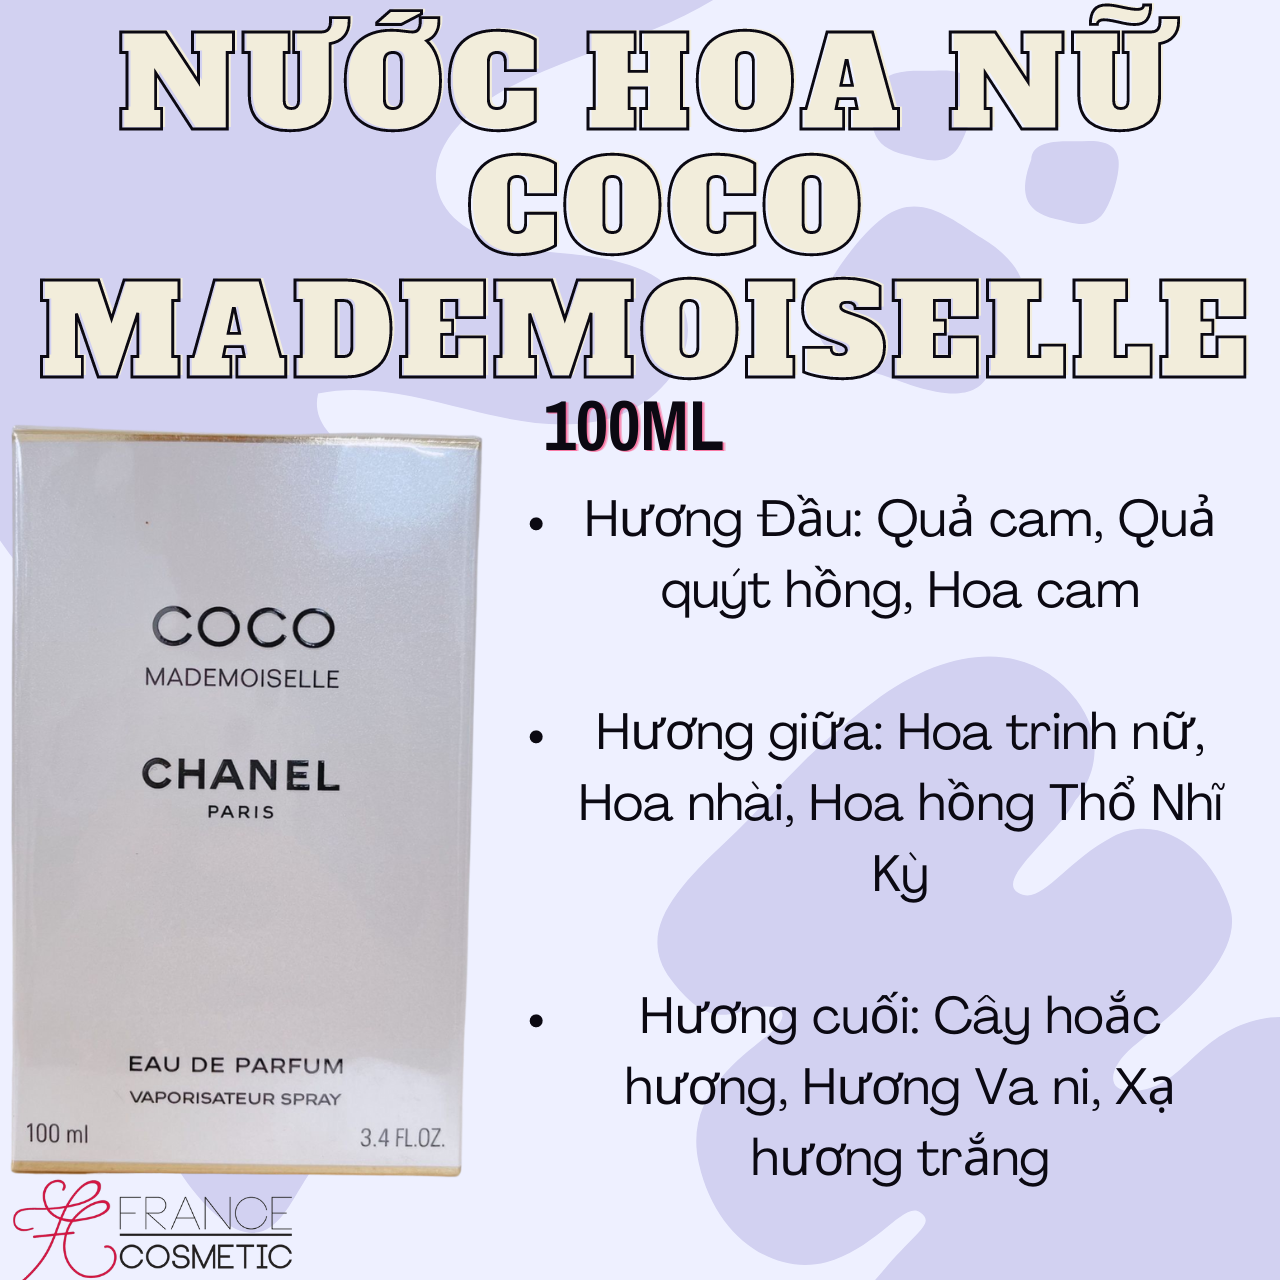 CHANEL NƯỚC HOA COCO MADEMOISELLE 100ML – Mỹ phẩm Pháp